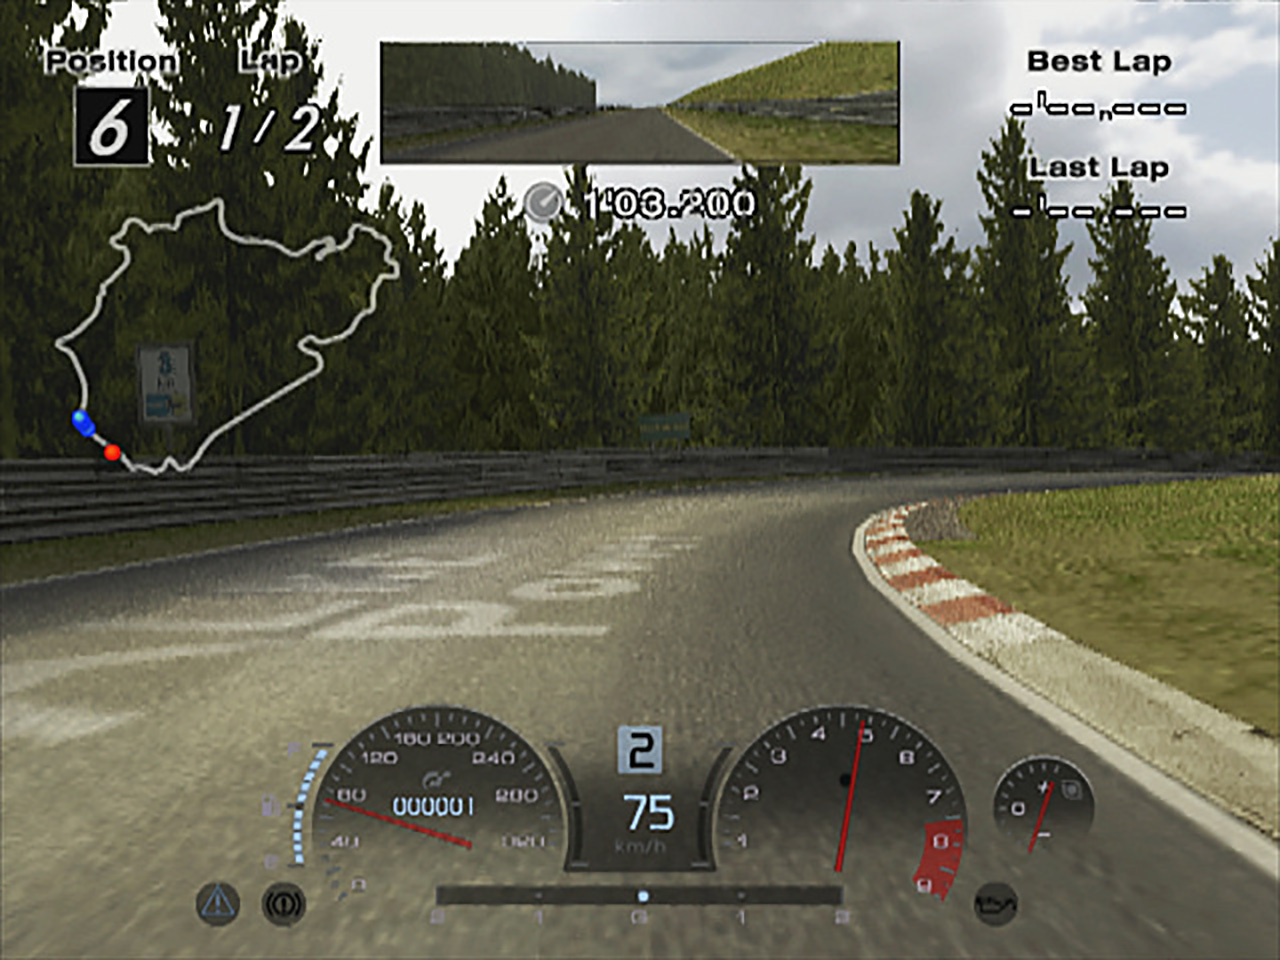 Piggyback Announces Gran Turismo 4 Official Guide - Press Release